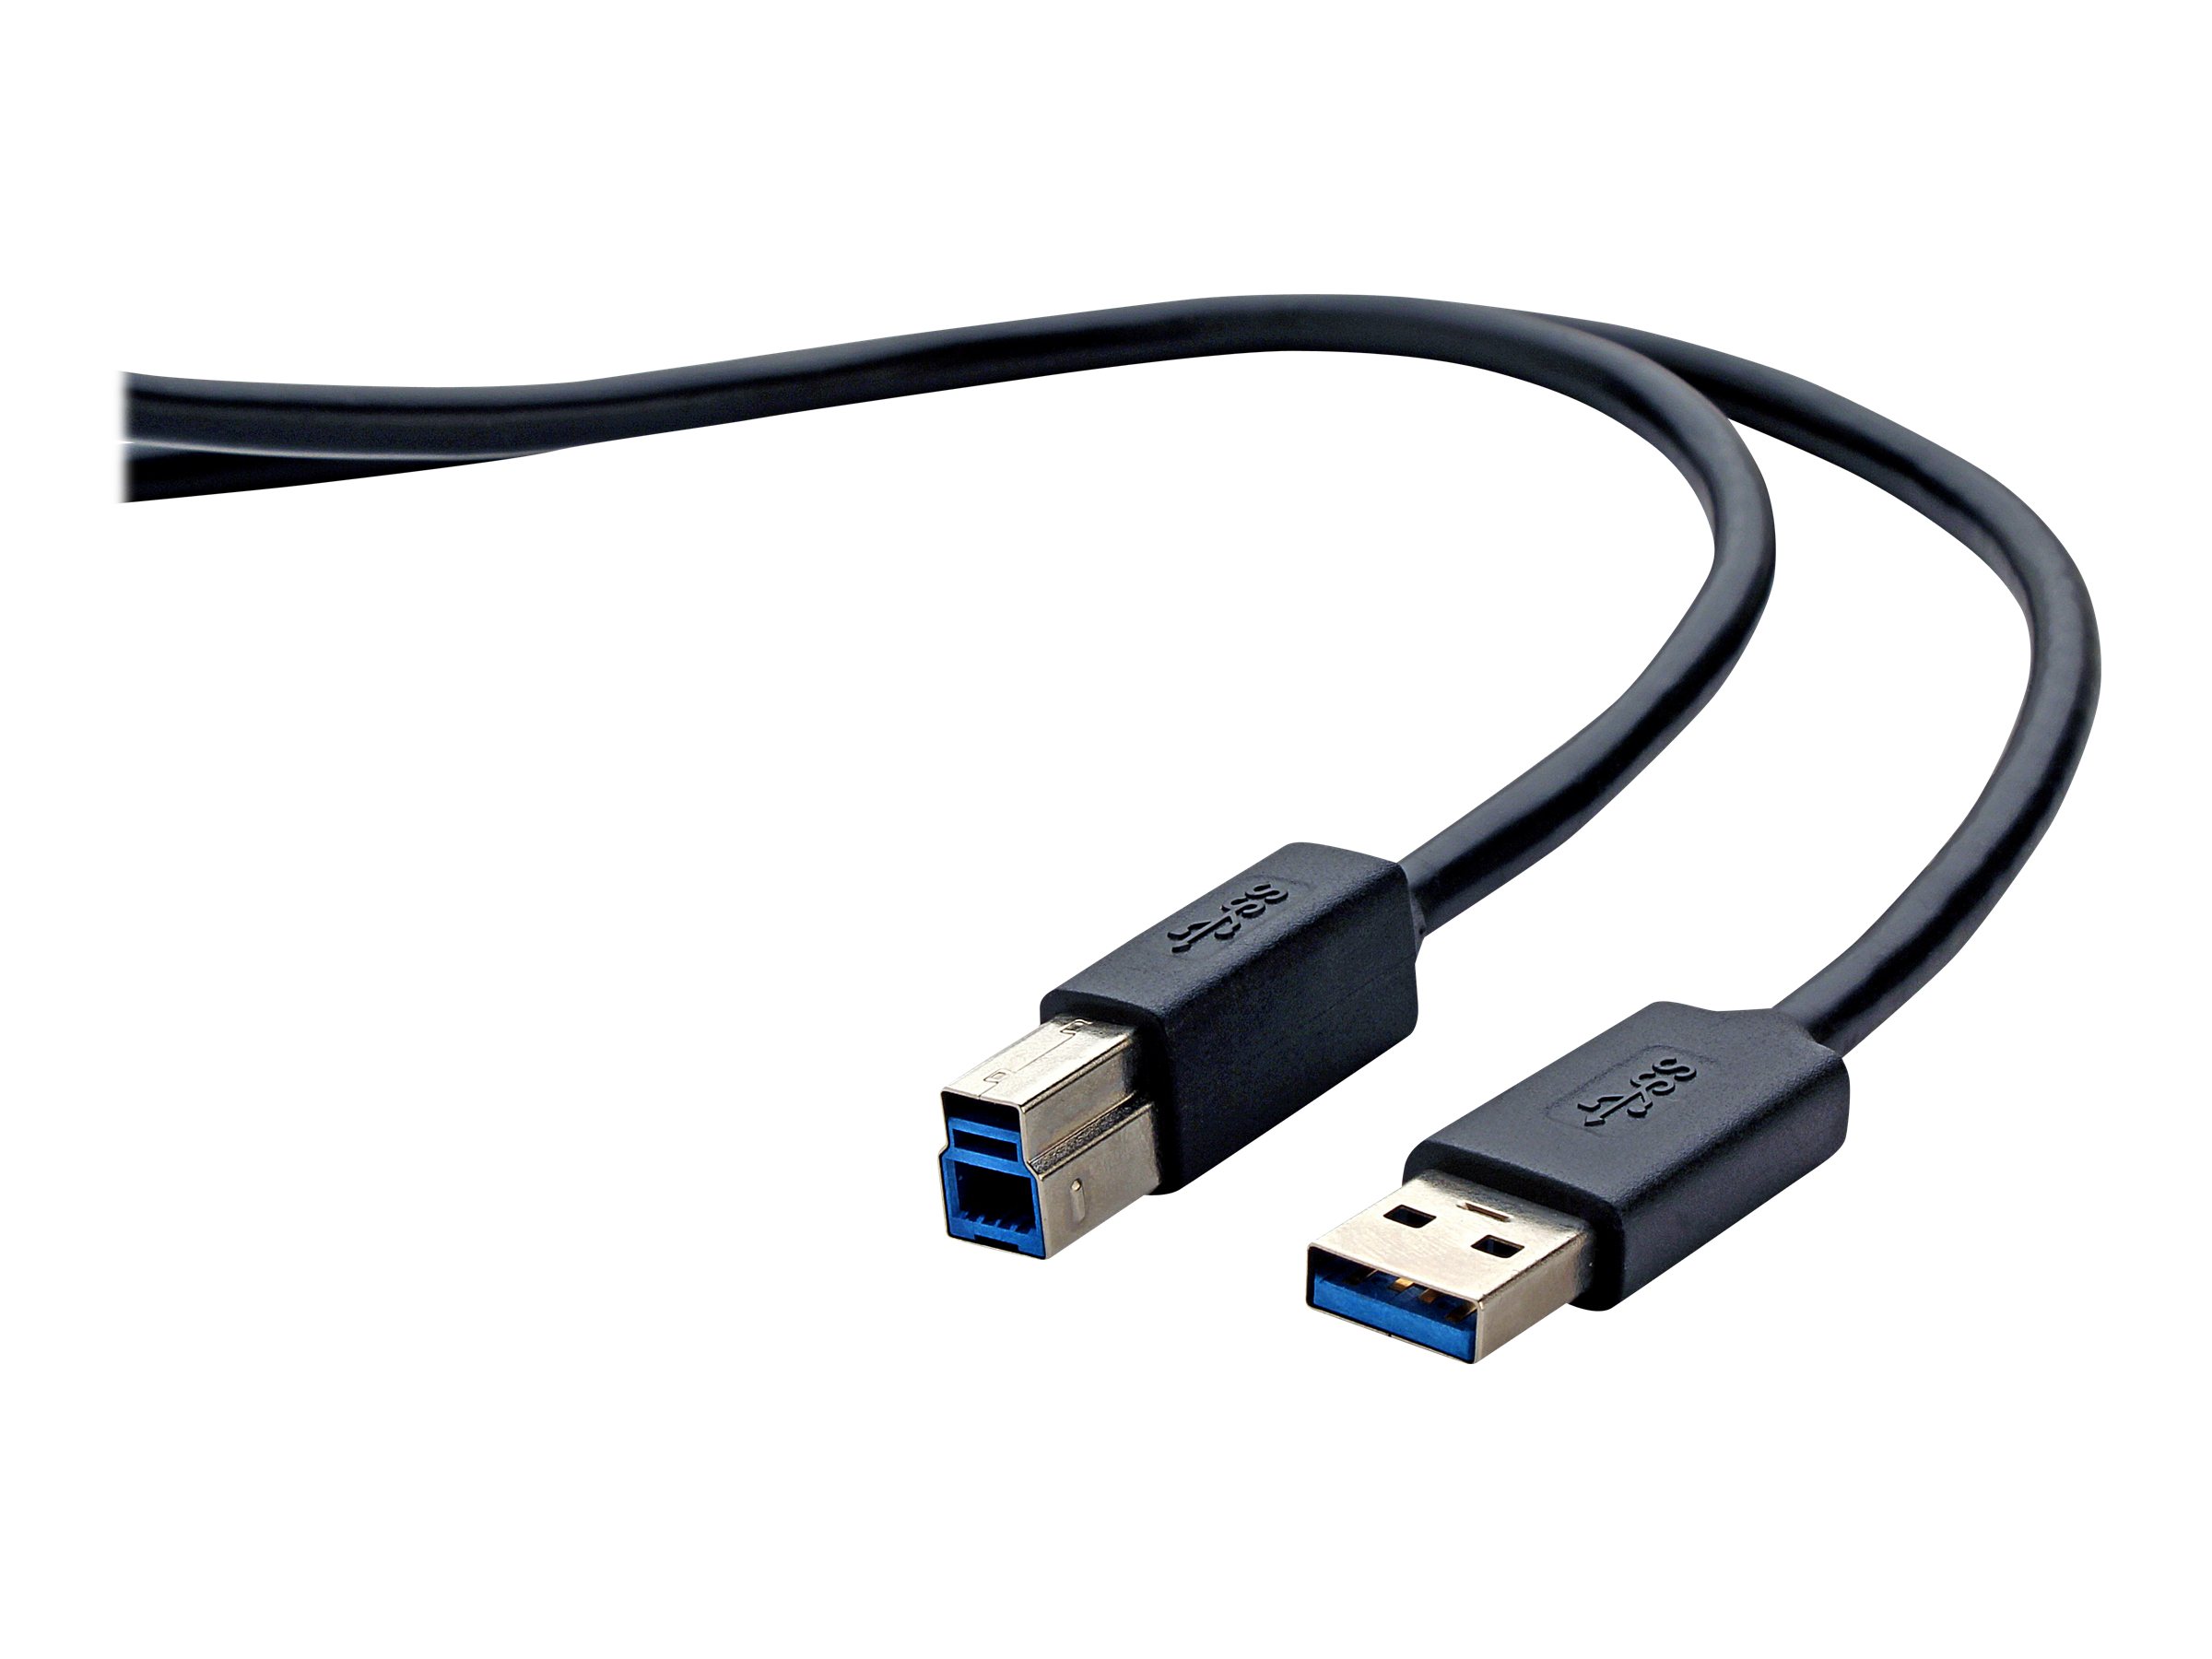 Belkin, BLKF3U159B10, SuperSpeed USB 3.0 Cable, 1 Each, Black - image 2 of 3